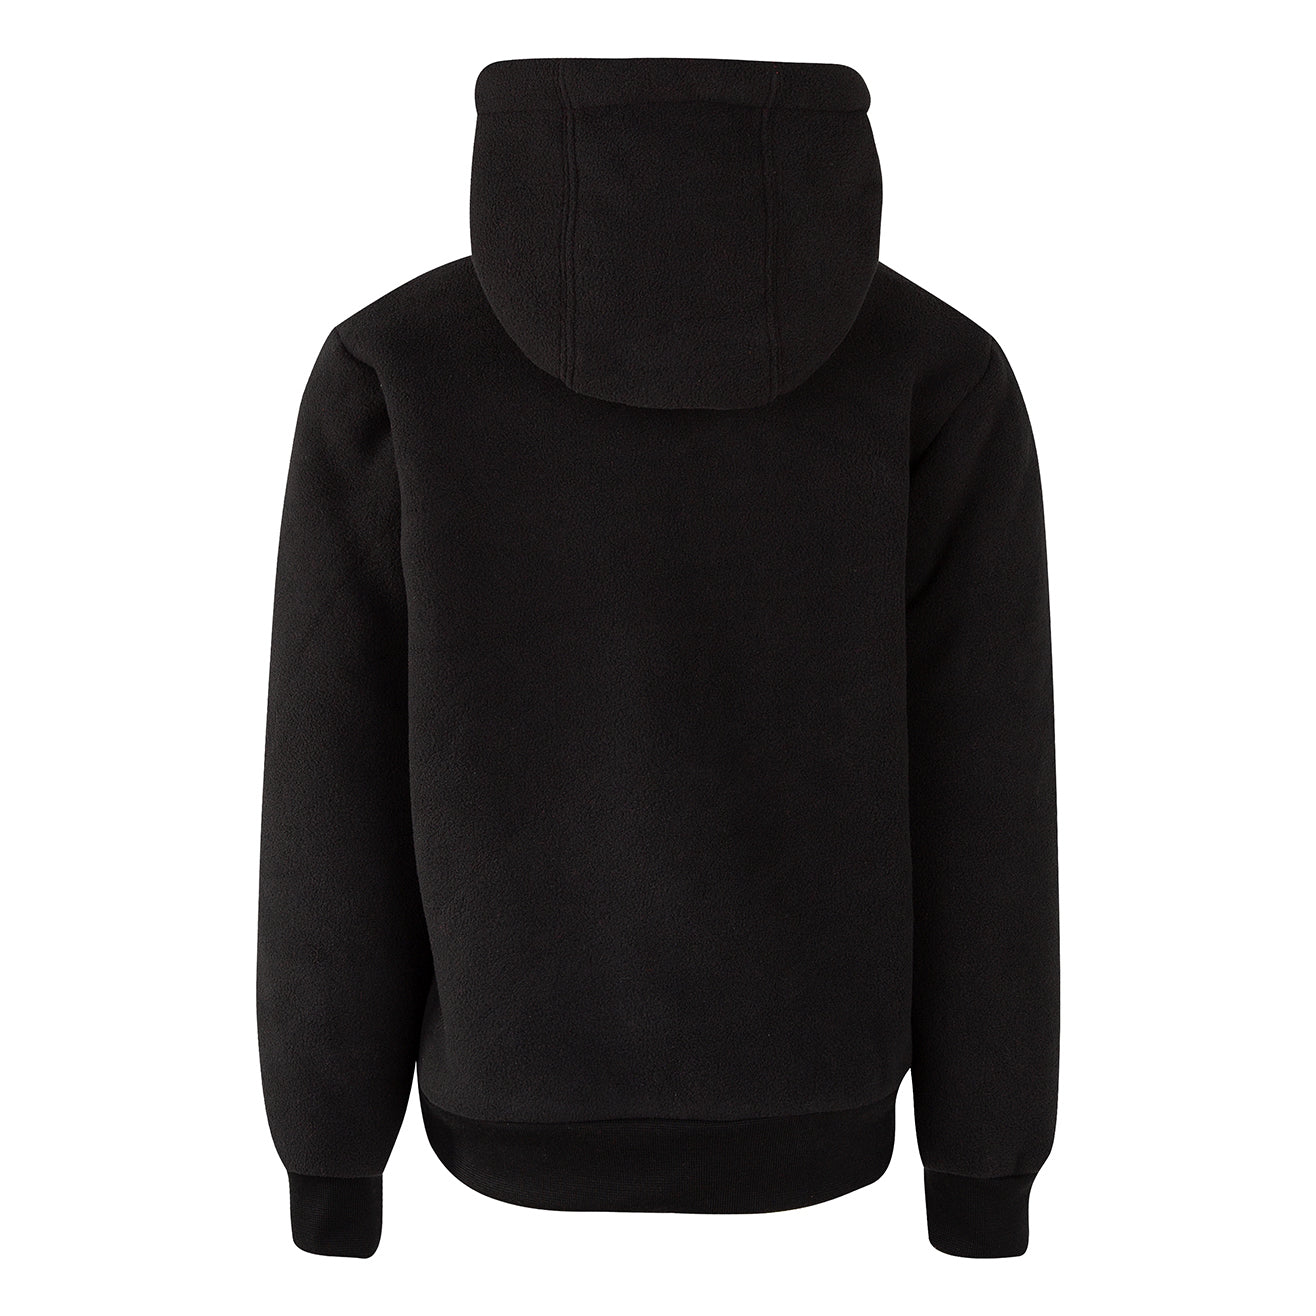 Nike Sherpa Fleece Lined Full-Zip Hoodie Sweatshirt Nike   